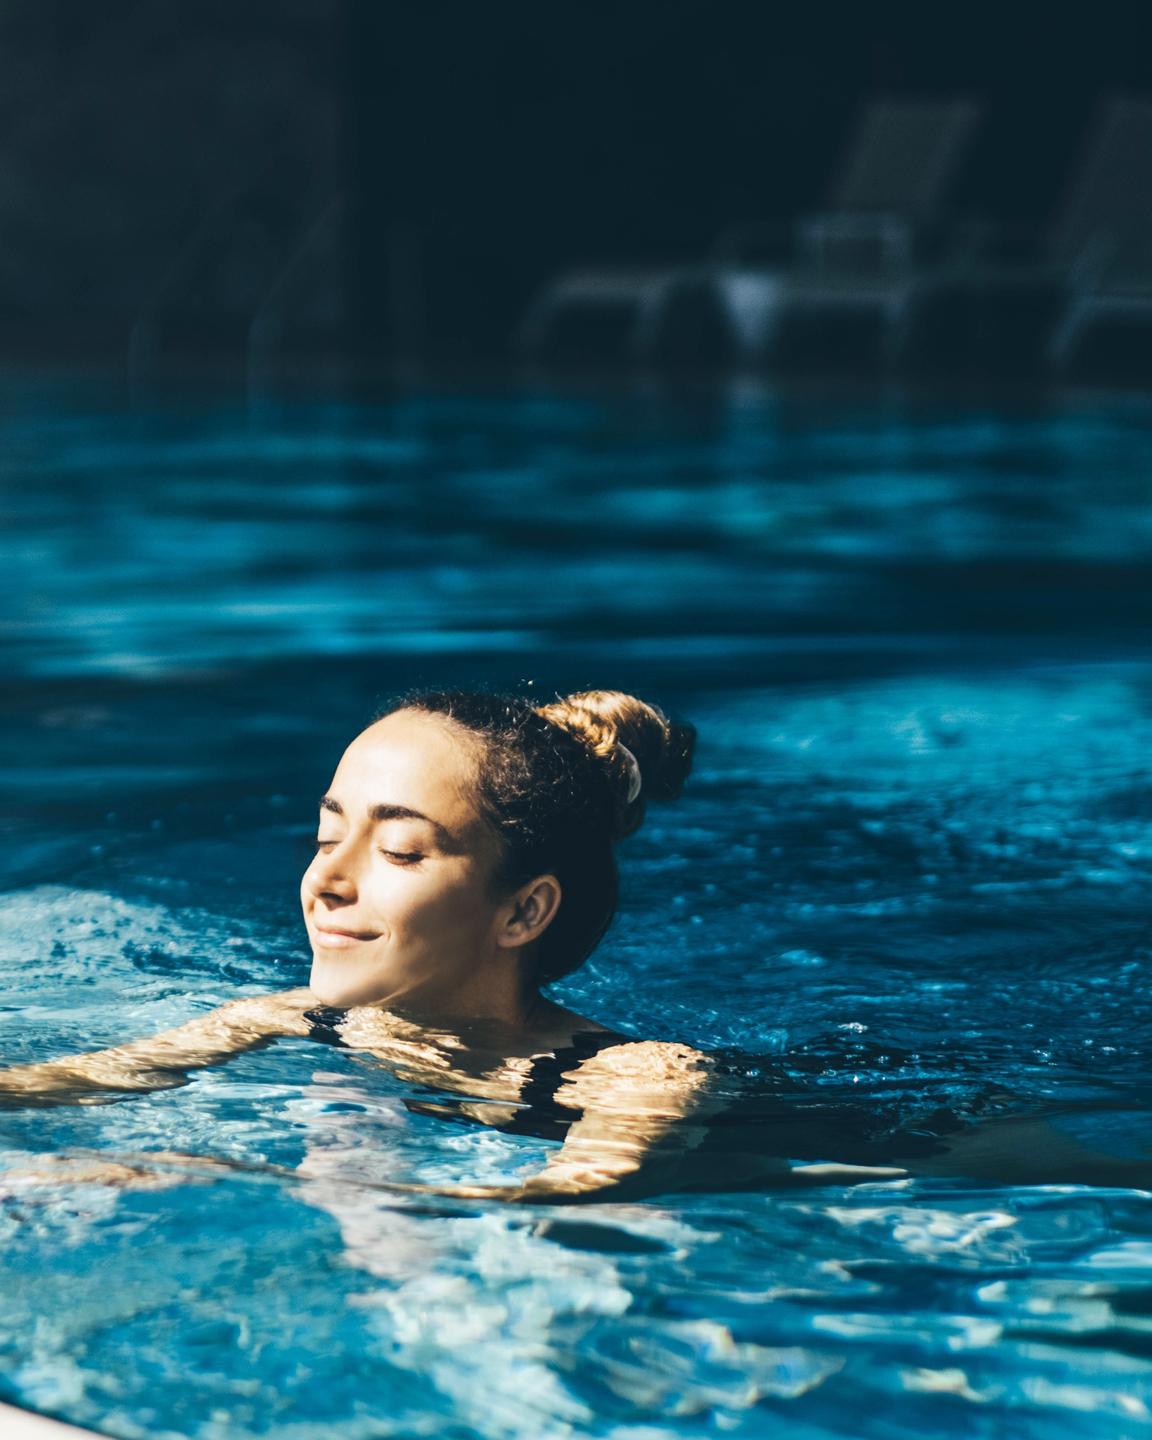 Femme qui se relax dans une piscine